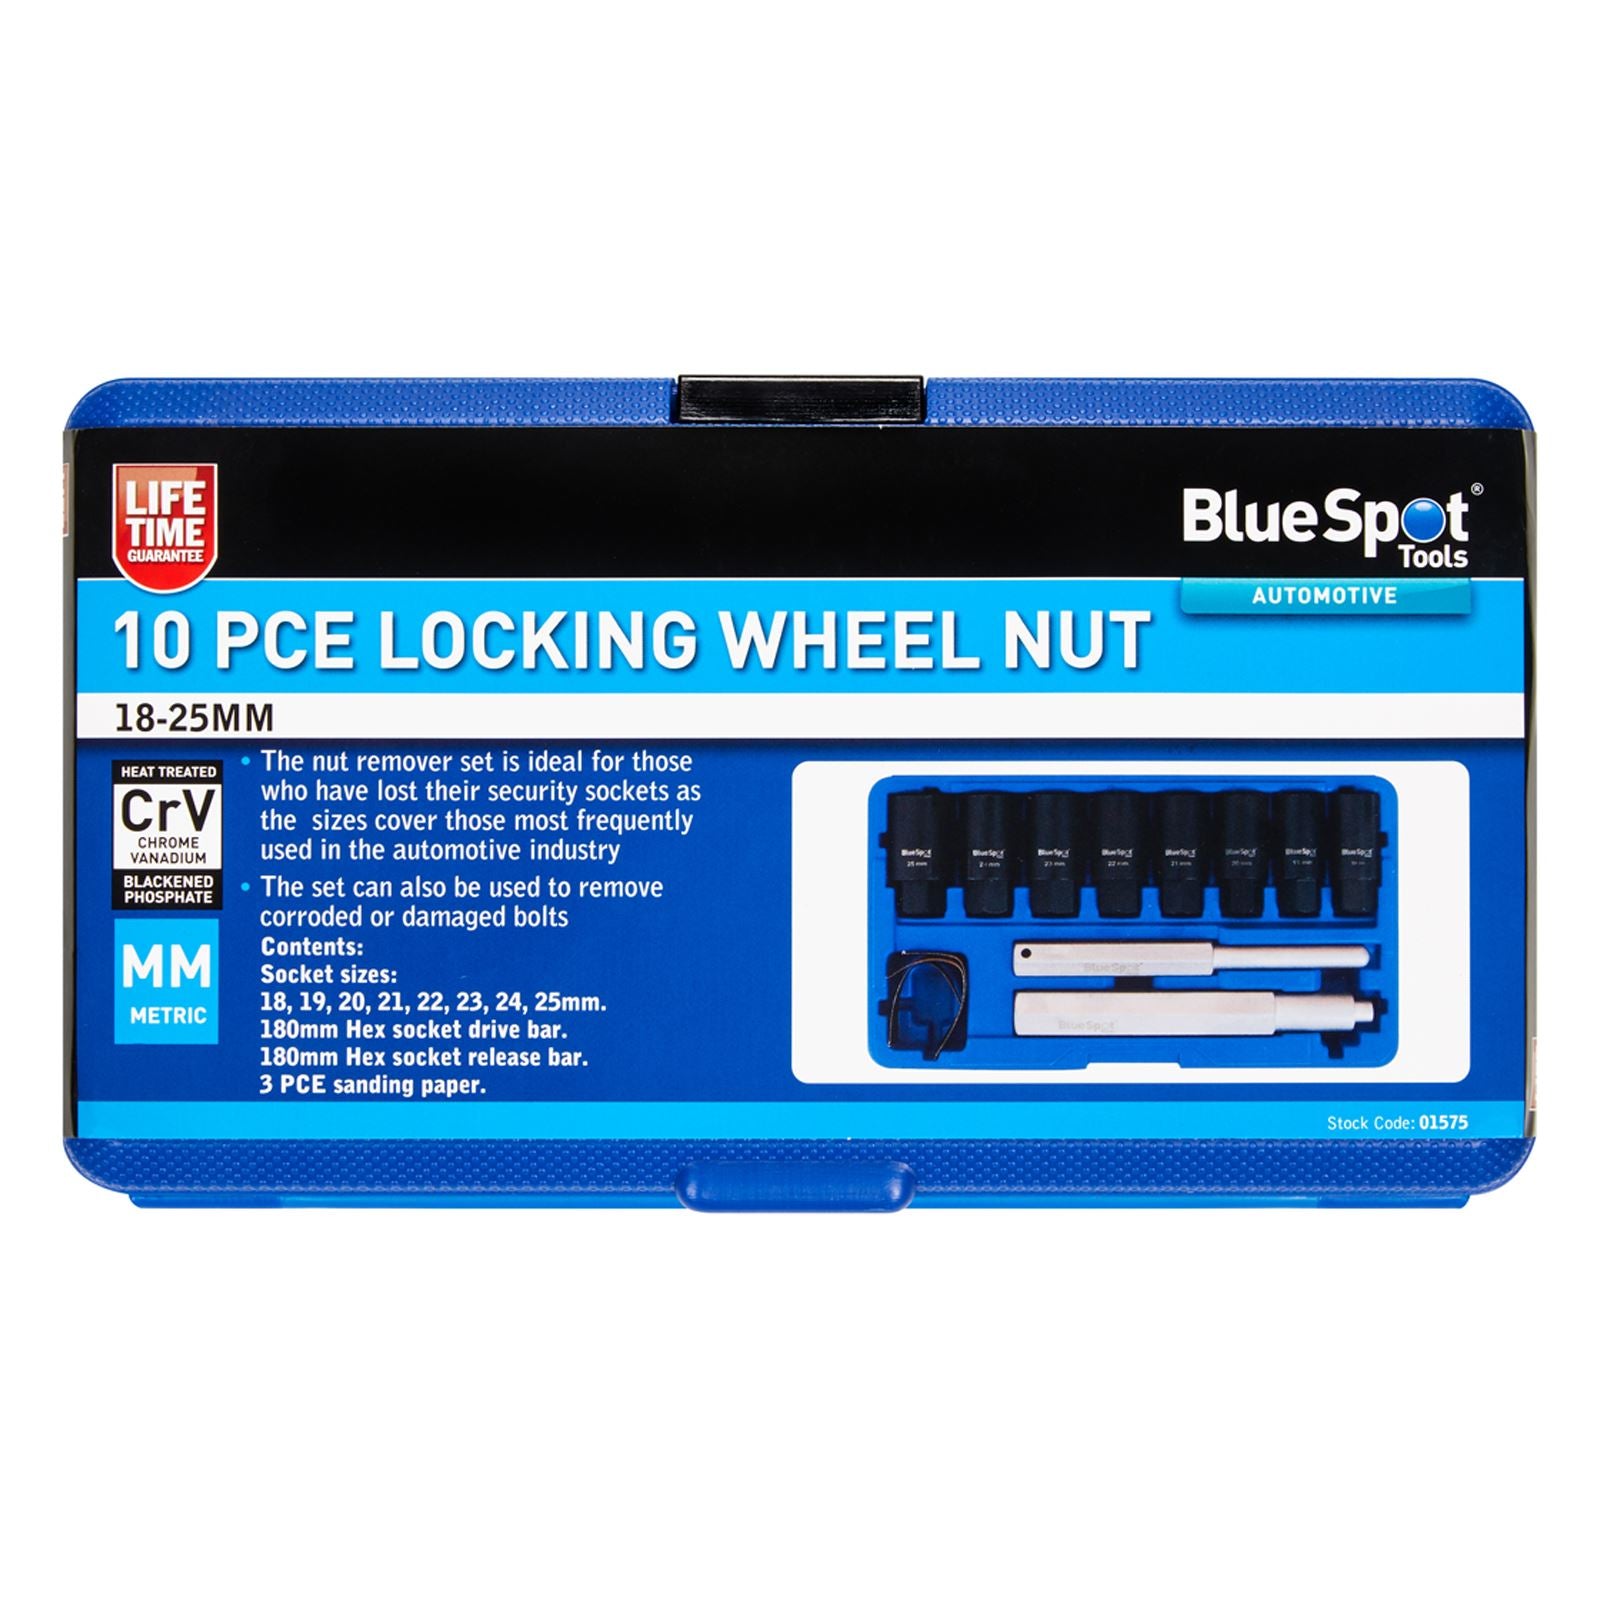 BlueSpot Locking Wheel Nut 10 Piece 18-25mm